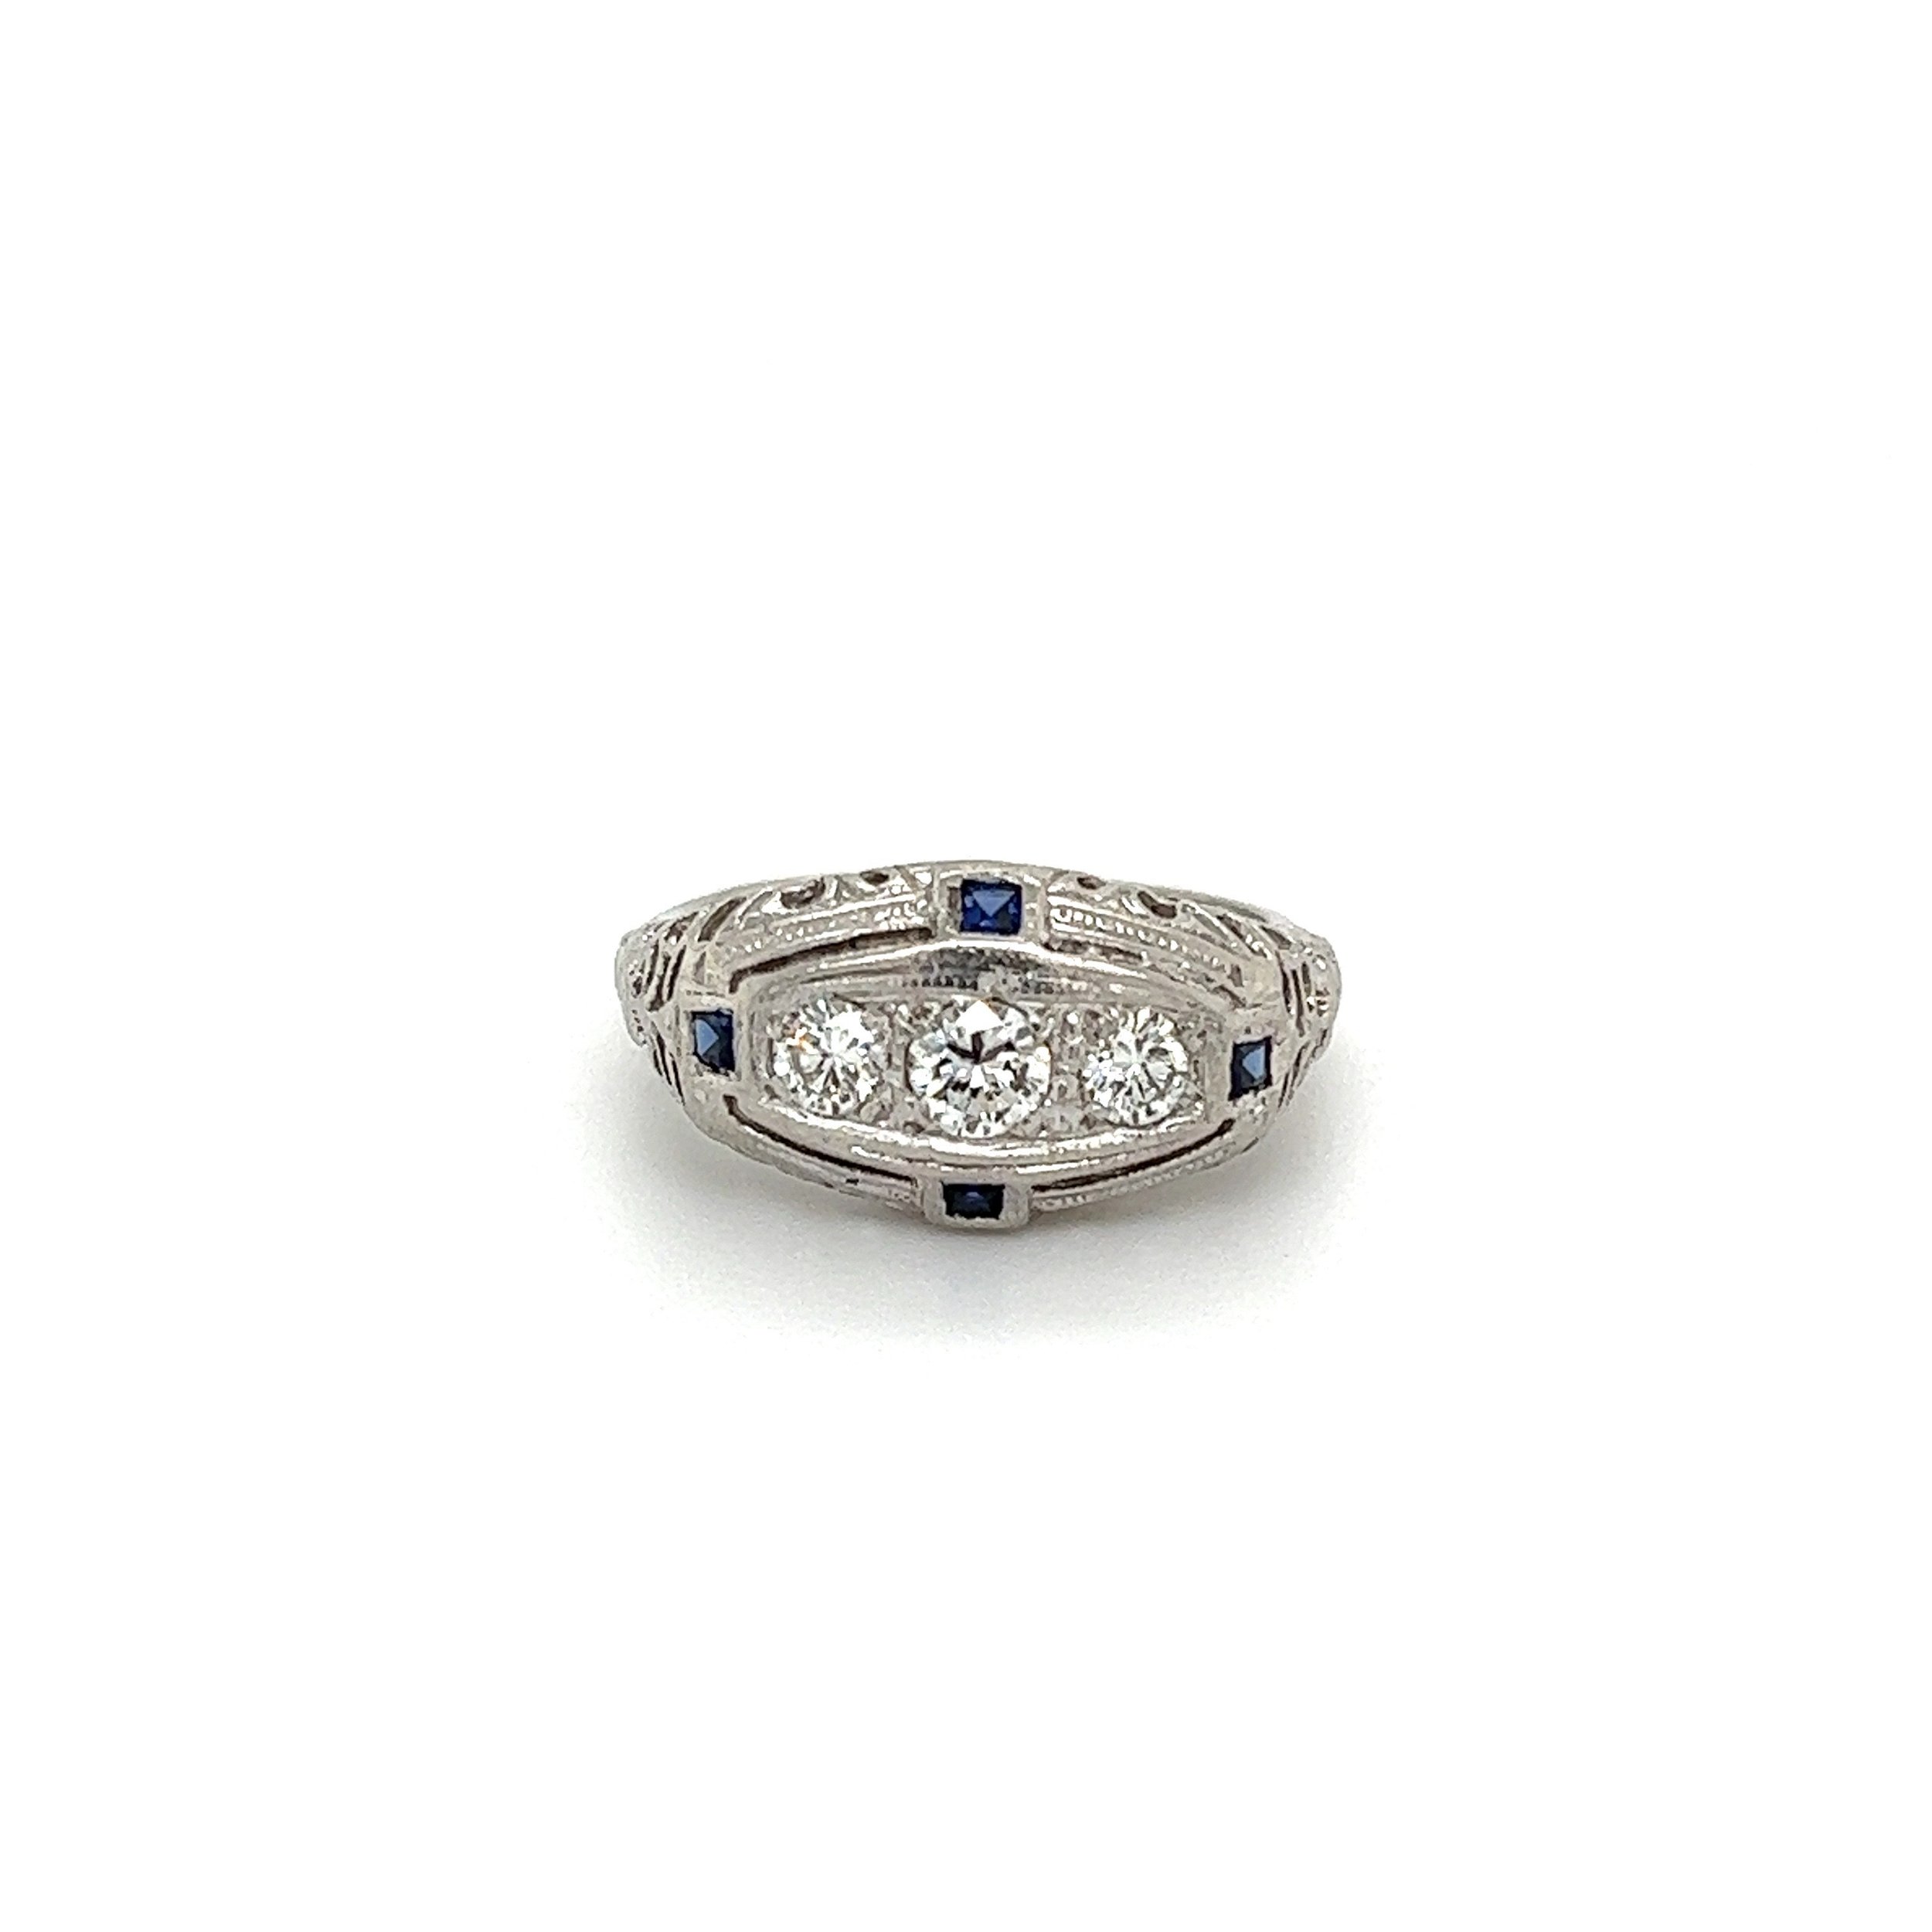 Platinum & 18K WG Art Deco 3 Stone .40tcw Diamond & Syn. Sapphire Filigree Milgrain Ring 4.5g, s4.75